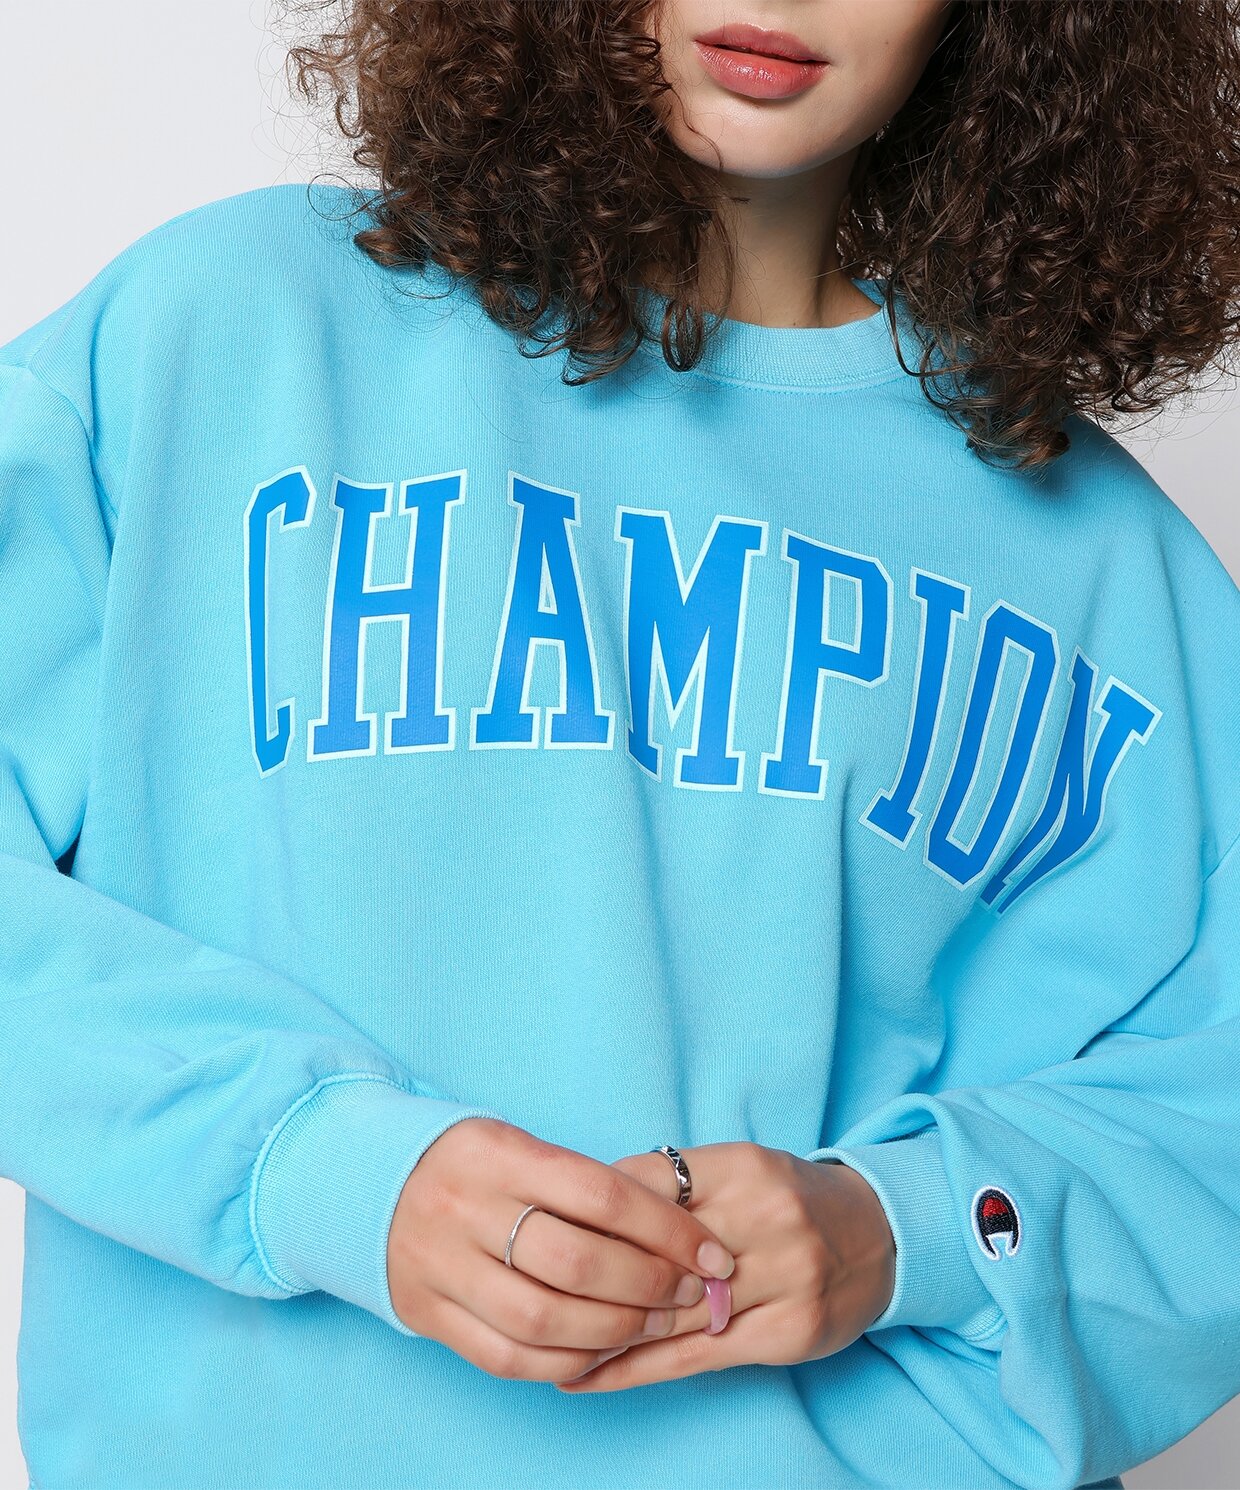 resm Champion Crewneck Croptop Sweatshirt